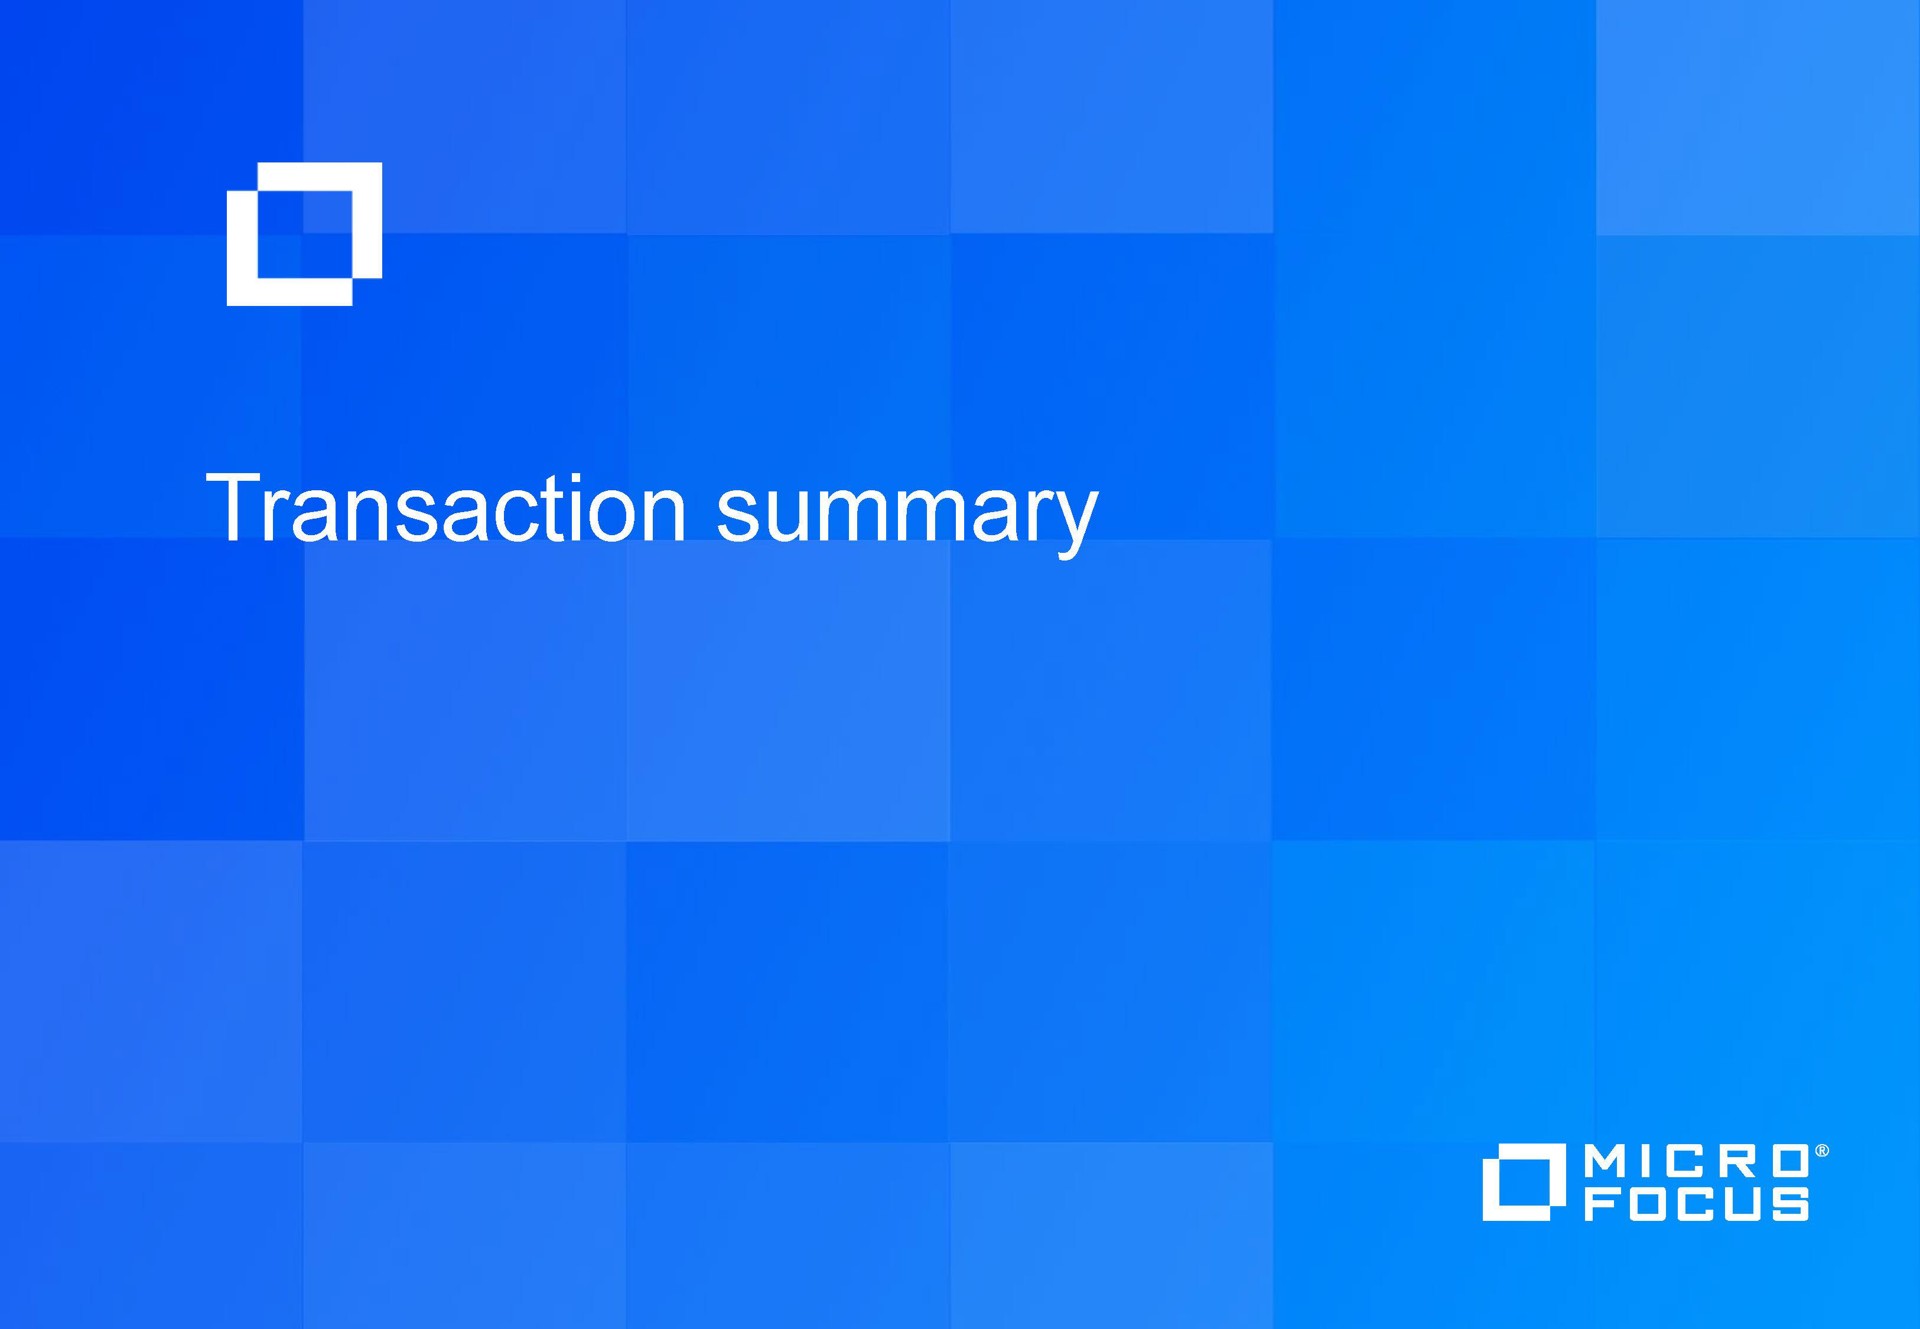 a transaction summary | Micro Focus